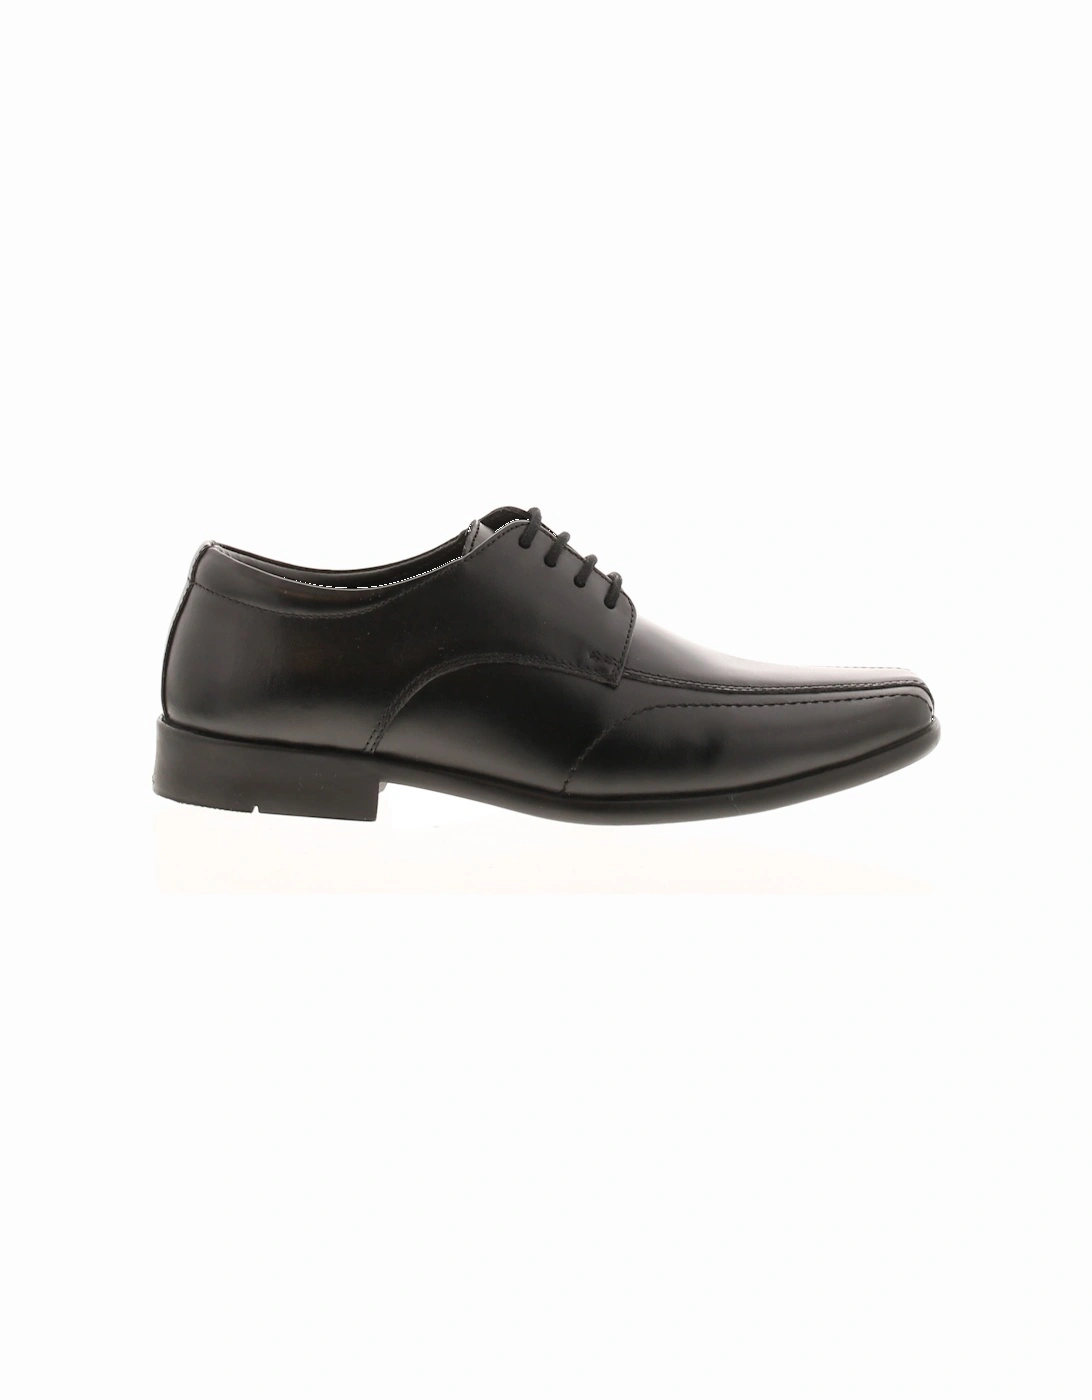 Boys School Shoes Formal Jon Leather black UK Size